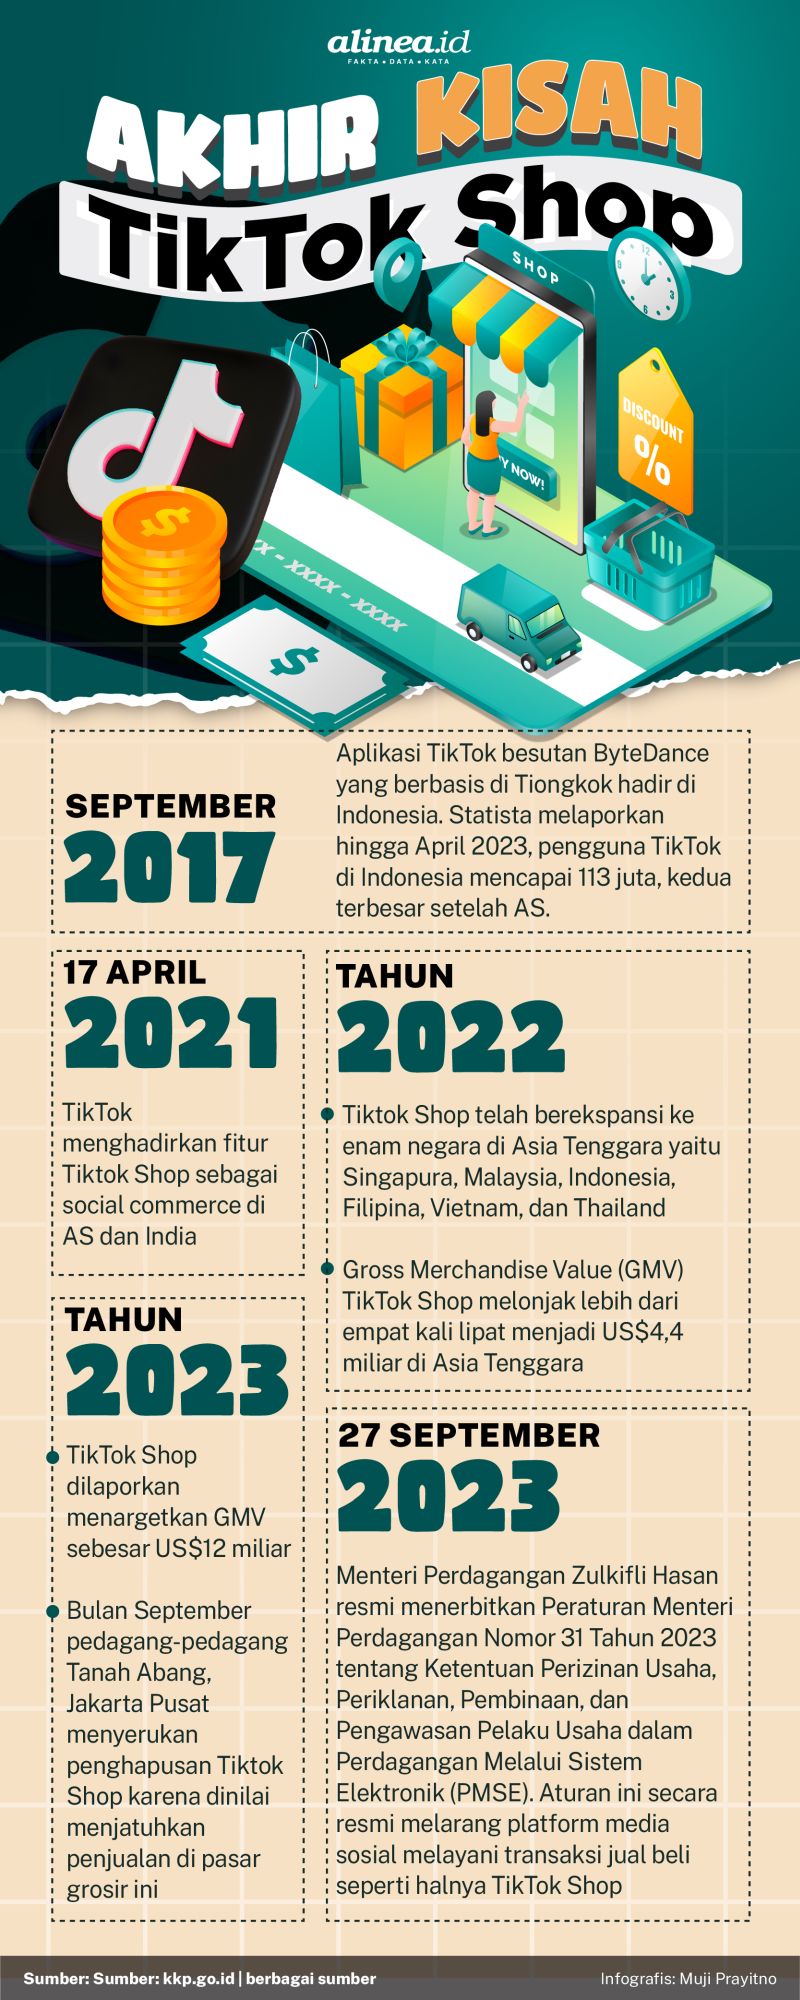 Infografik TikTok Shop. Alinea.id/Muji Prayitno